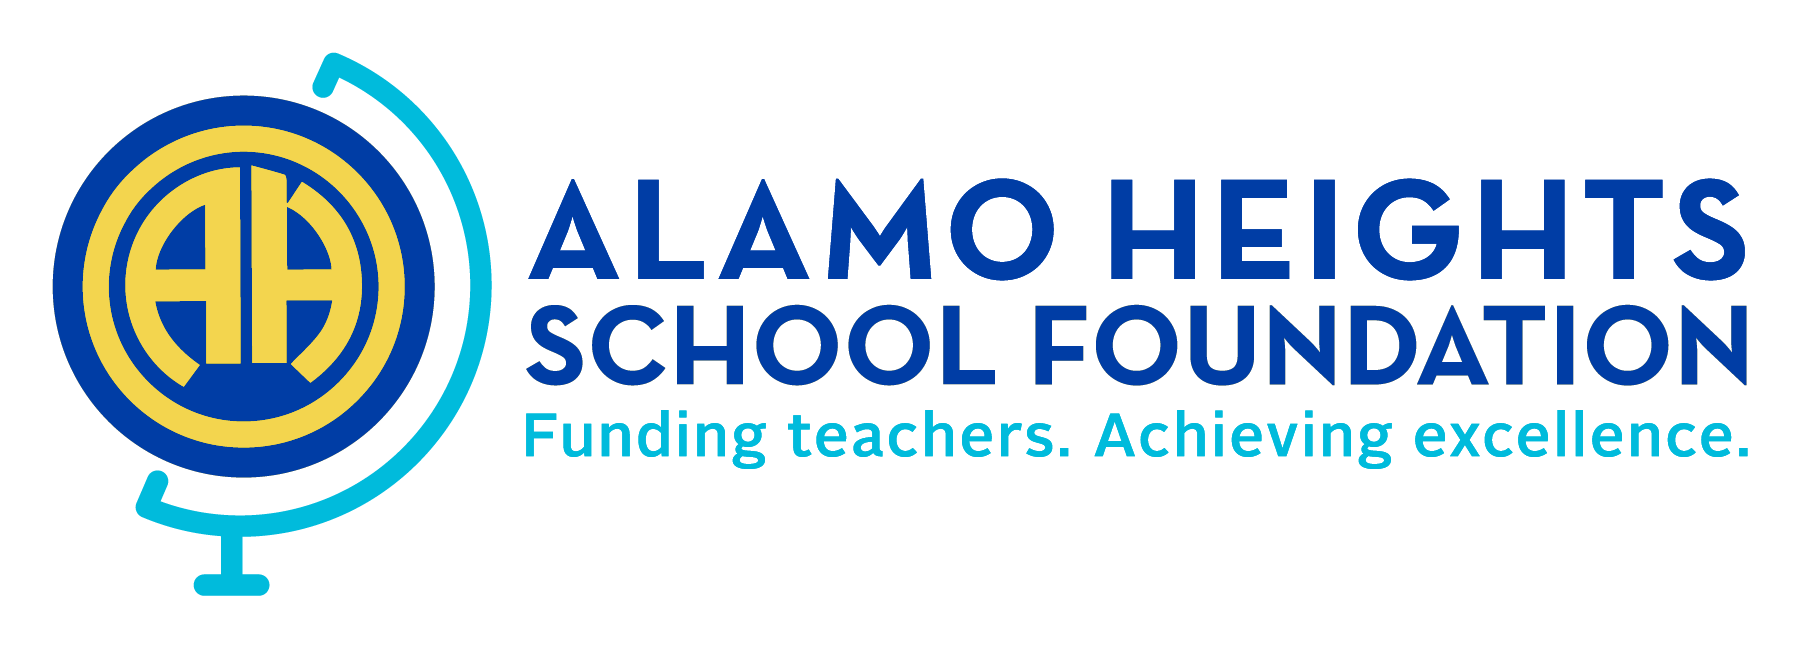 Alamo Heights School Foundation